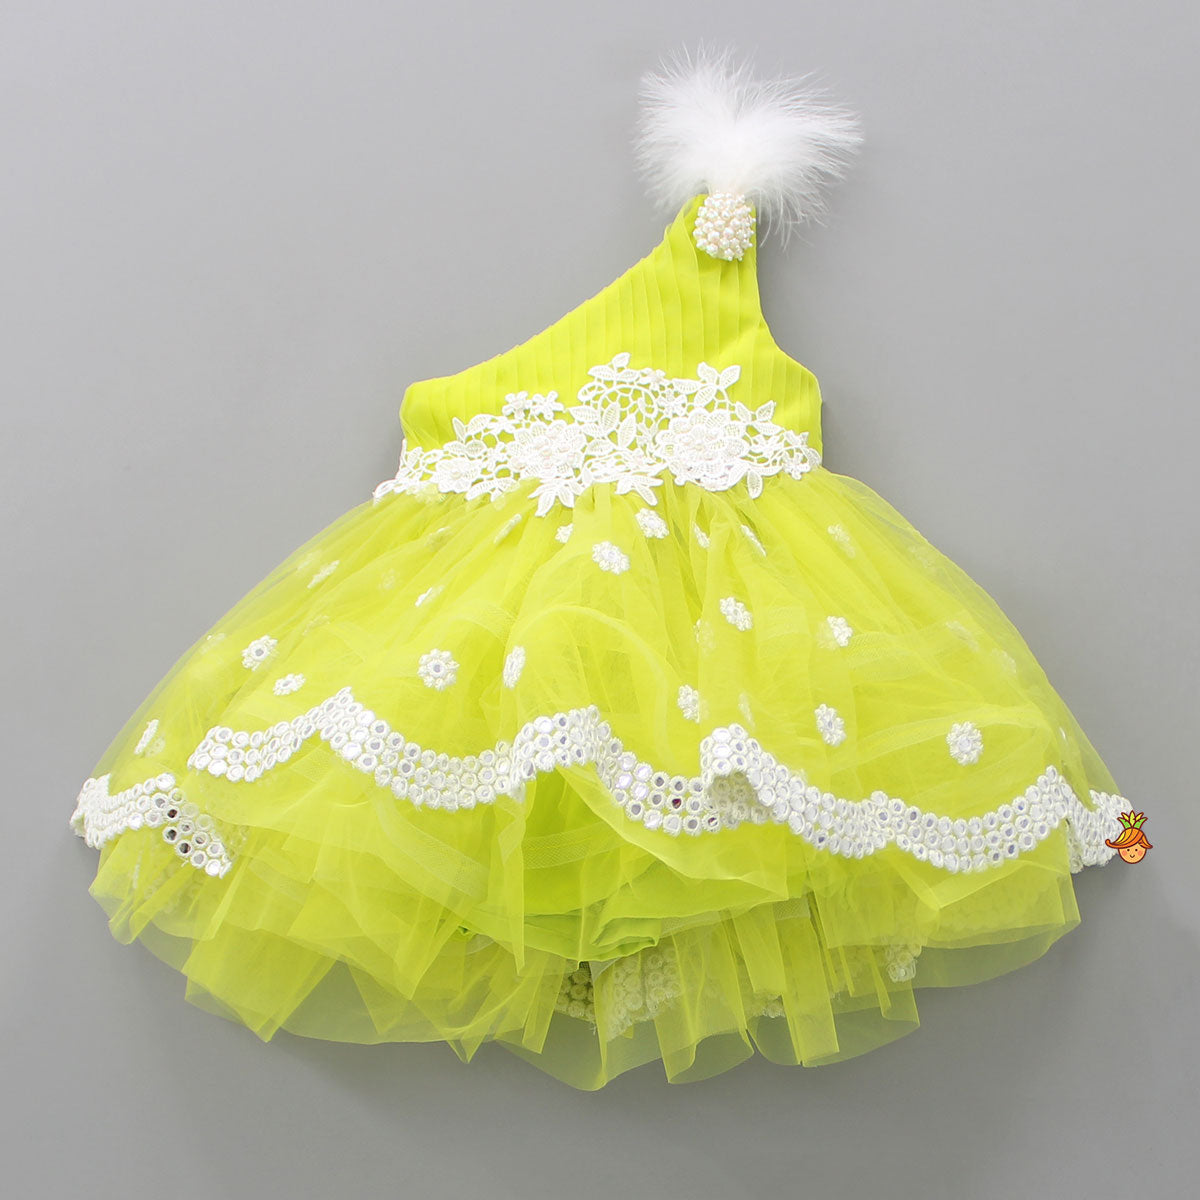 Little Muffet - All new designer wear dresses for your... | Facebook